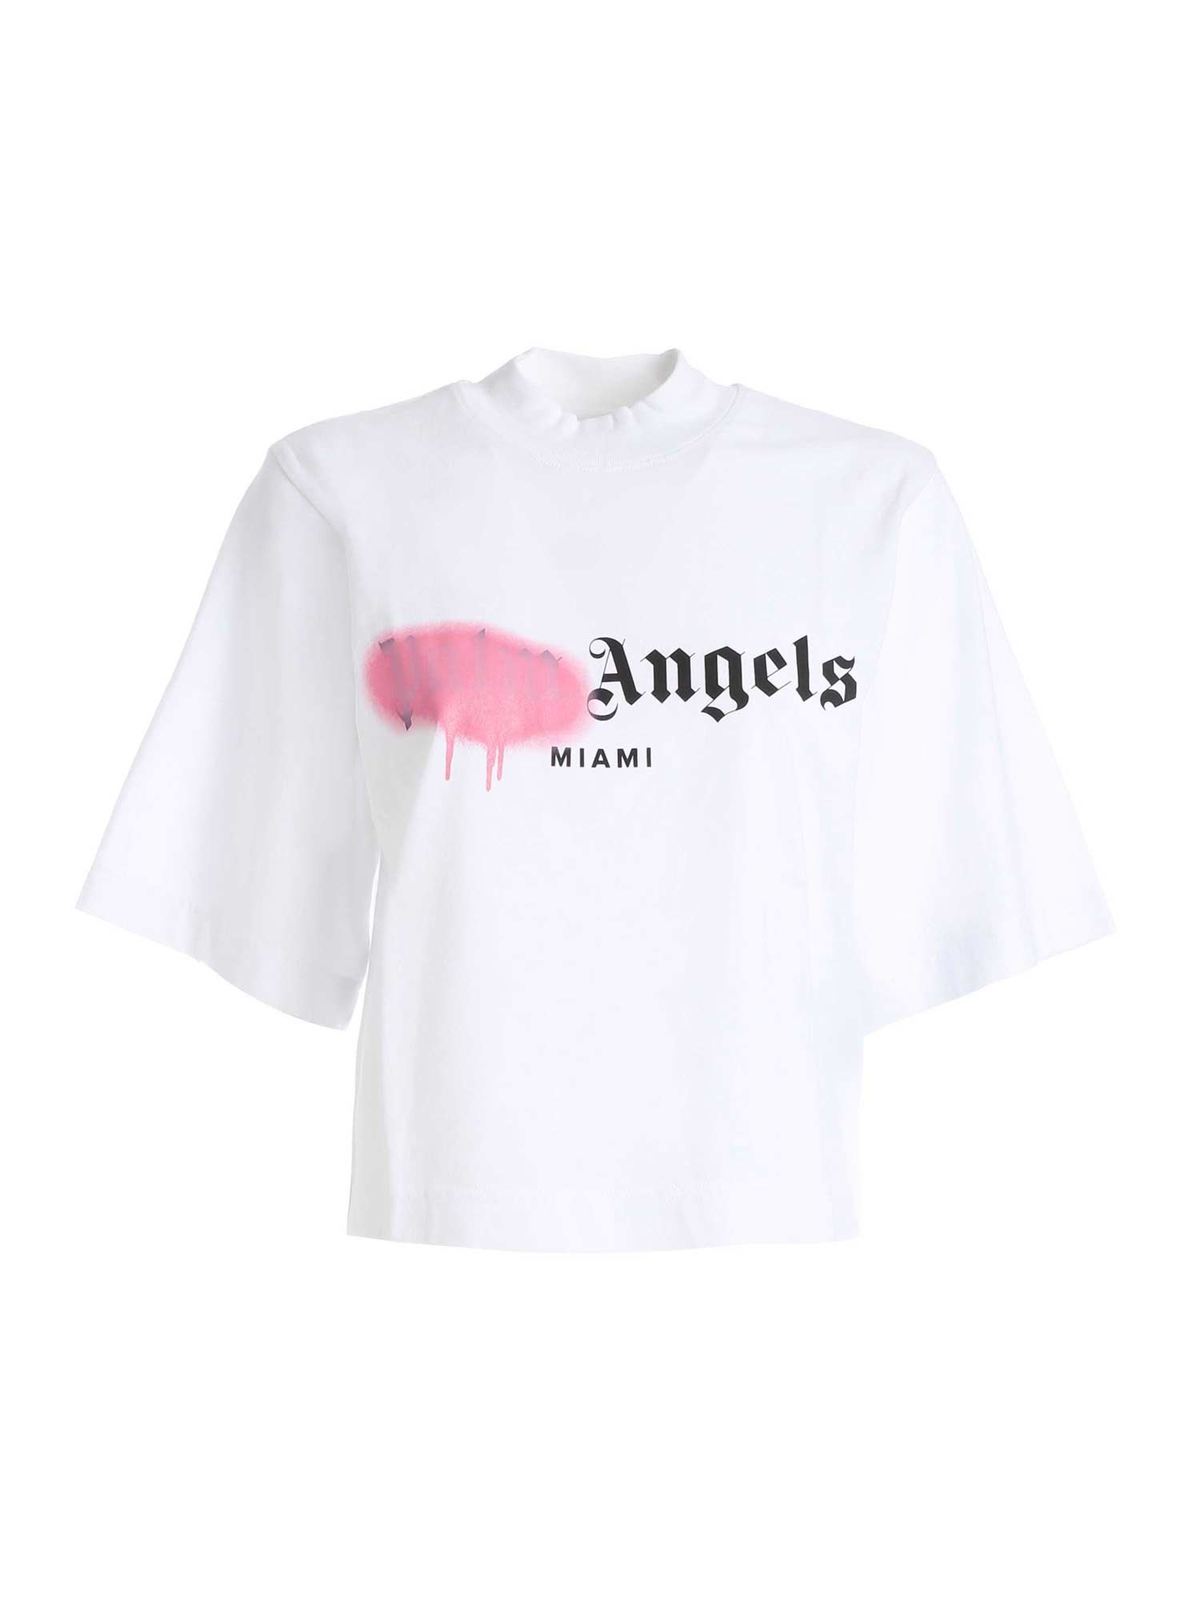 palm angels t shirt sprayed logo